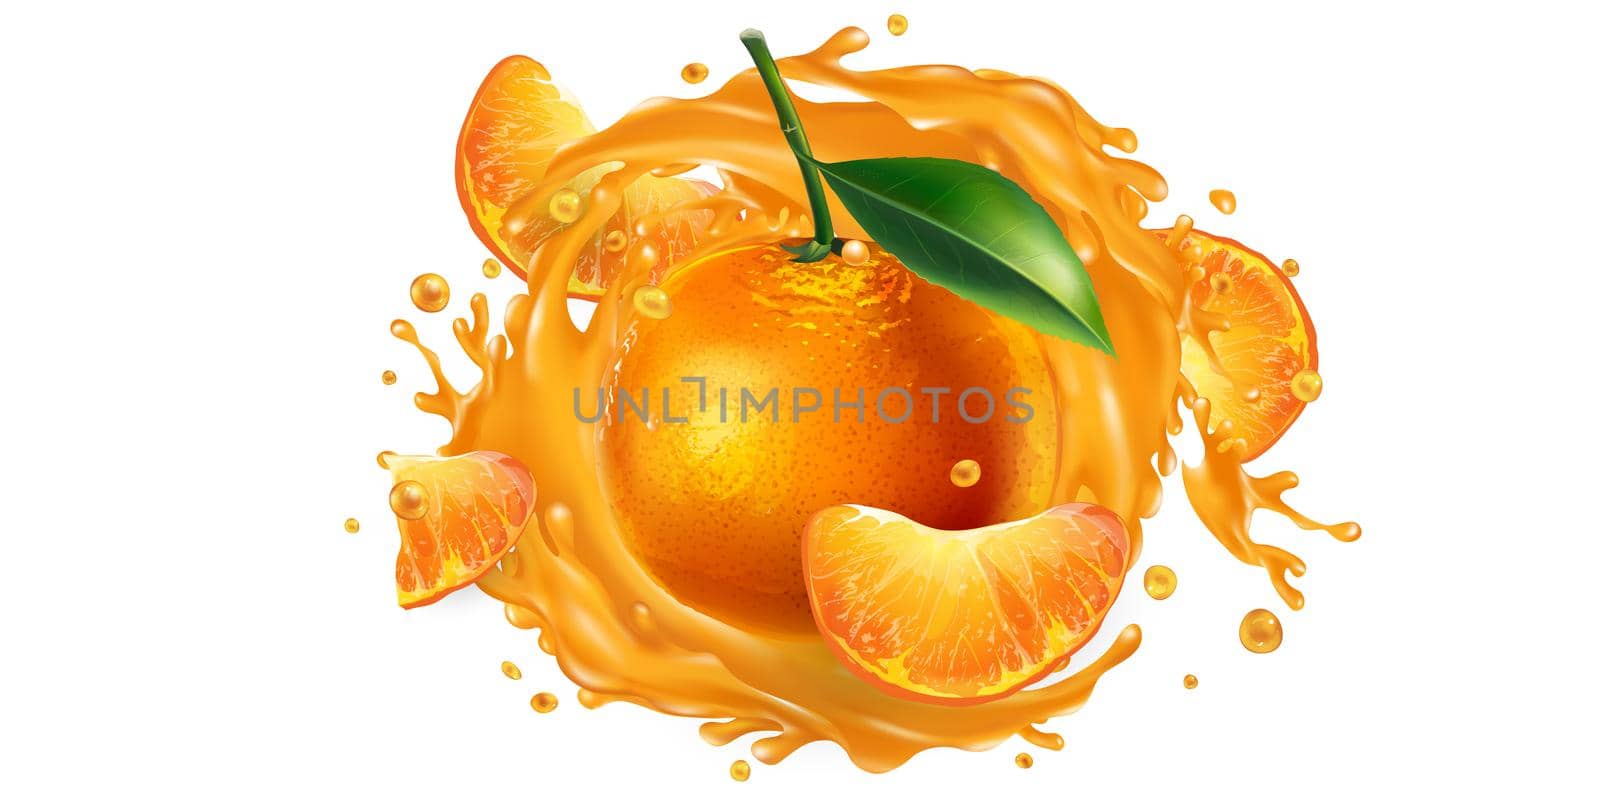 Fresh mandarins and a splash of fruit juice on a white background. Realistic style illustration.